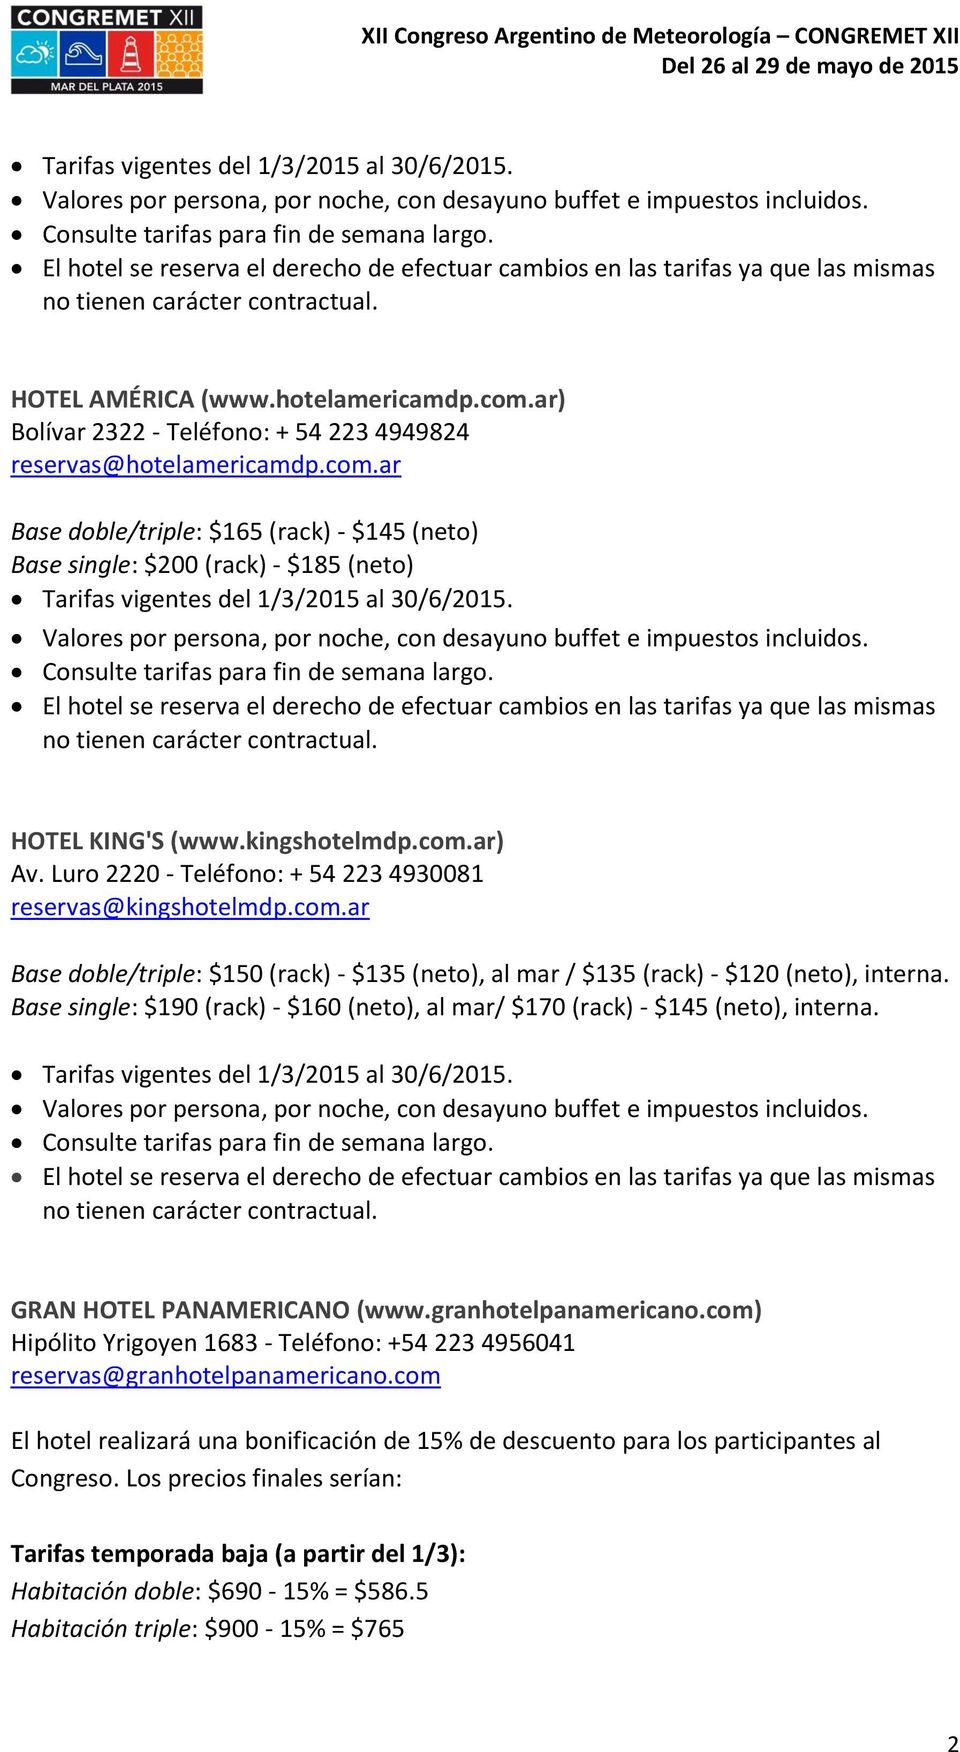 Base single: $190 (rack) - $160 (neto), al mar/ $170 (rack) - $145 (neto), interna. GRAN HOTEL PANAMERICANO (www.granhotelpanamericano.